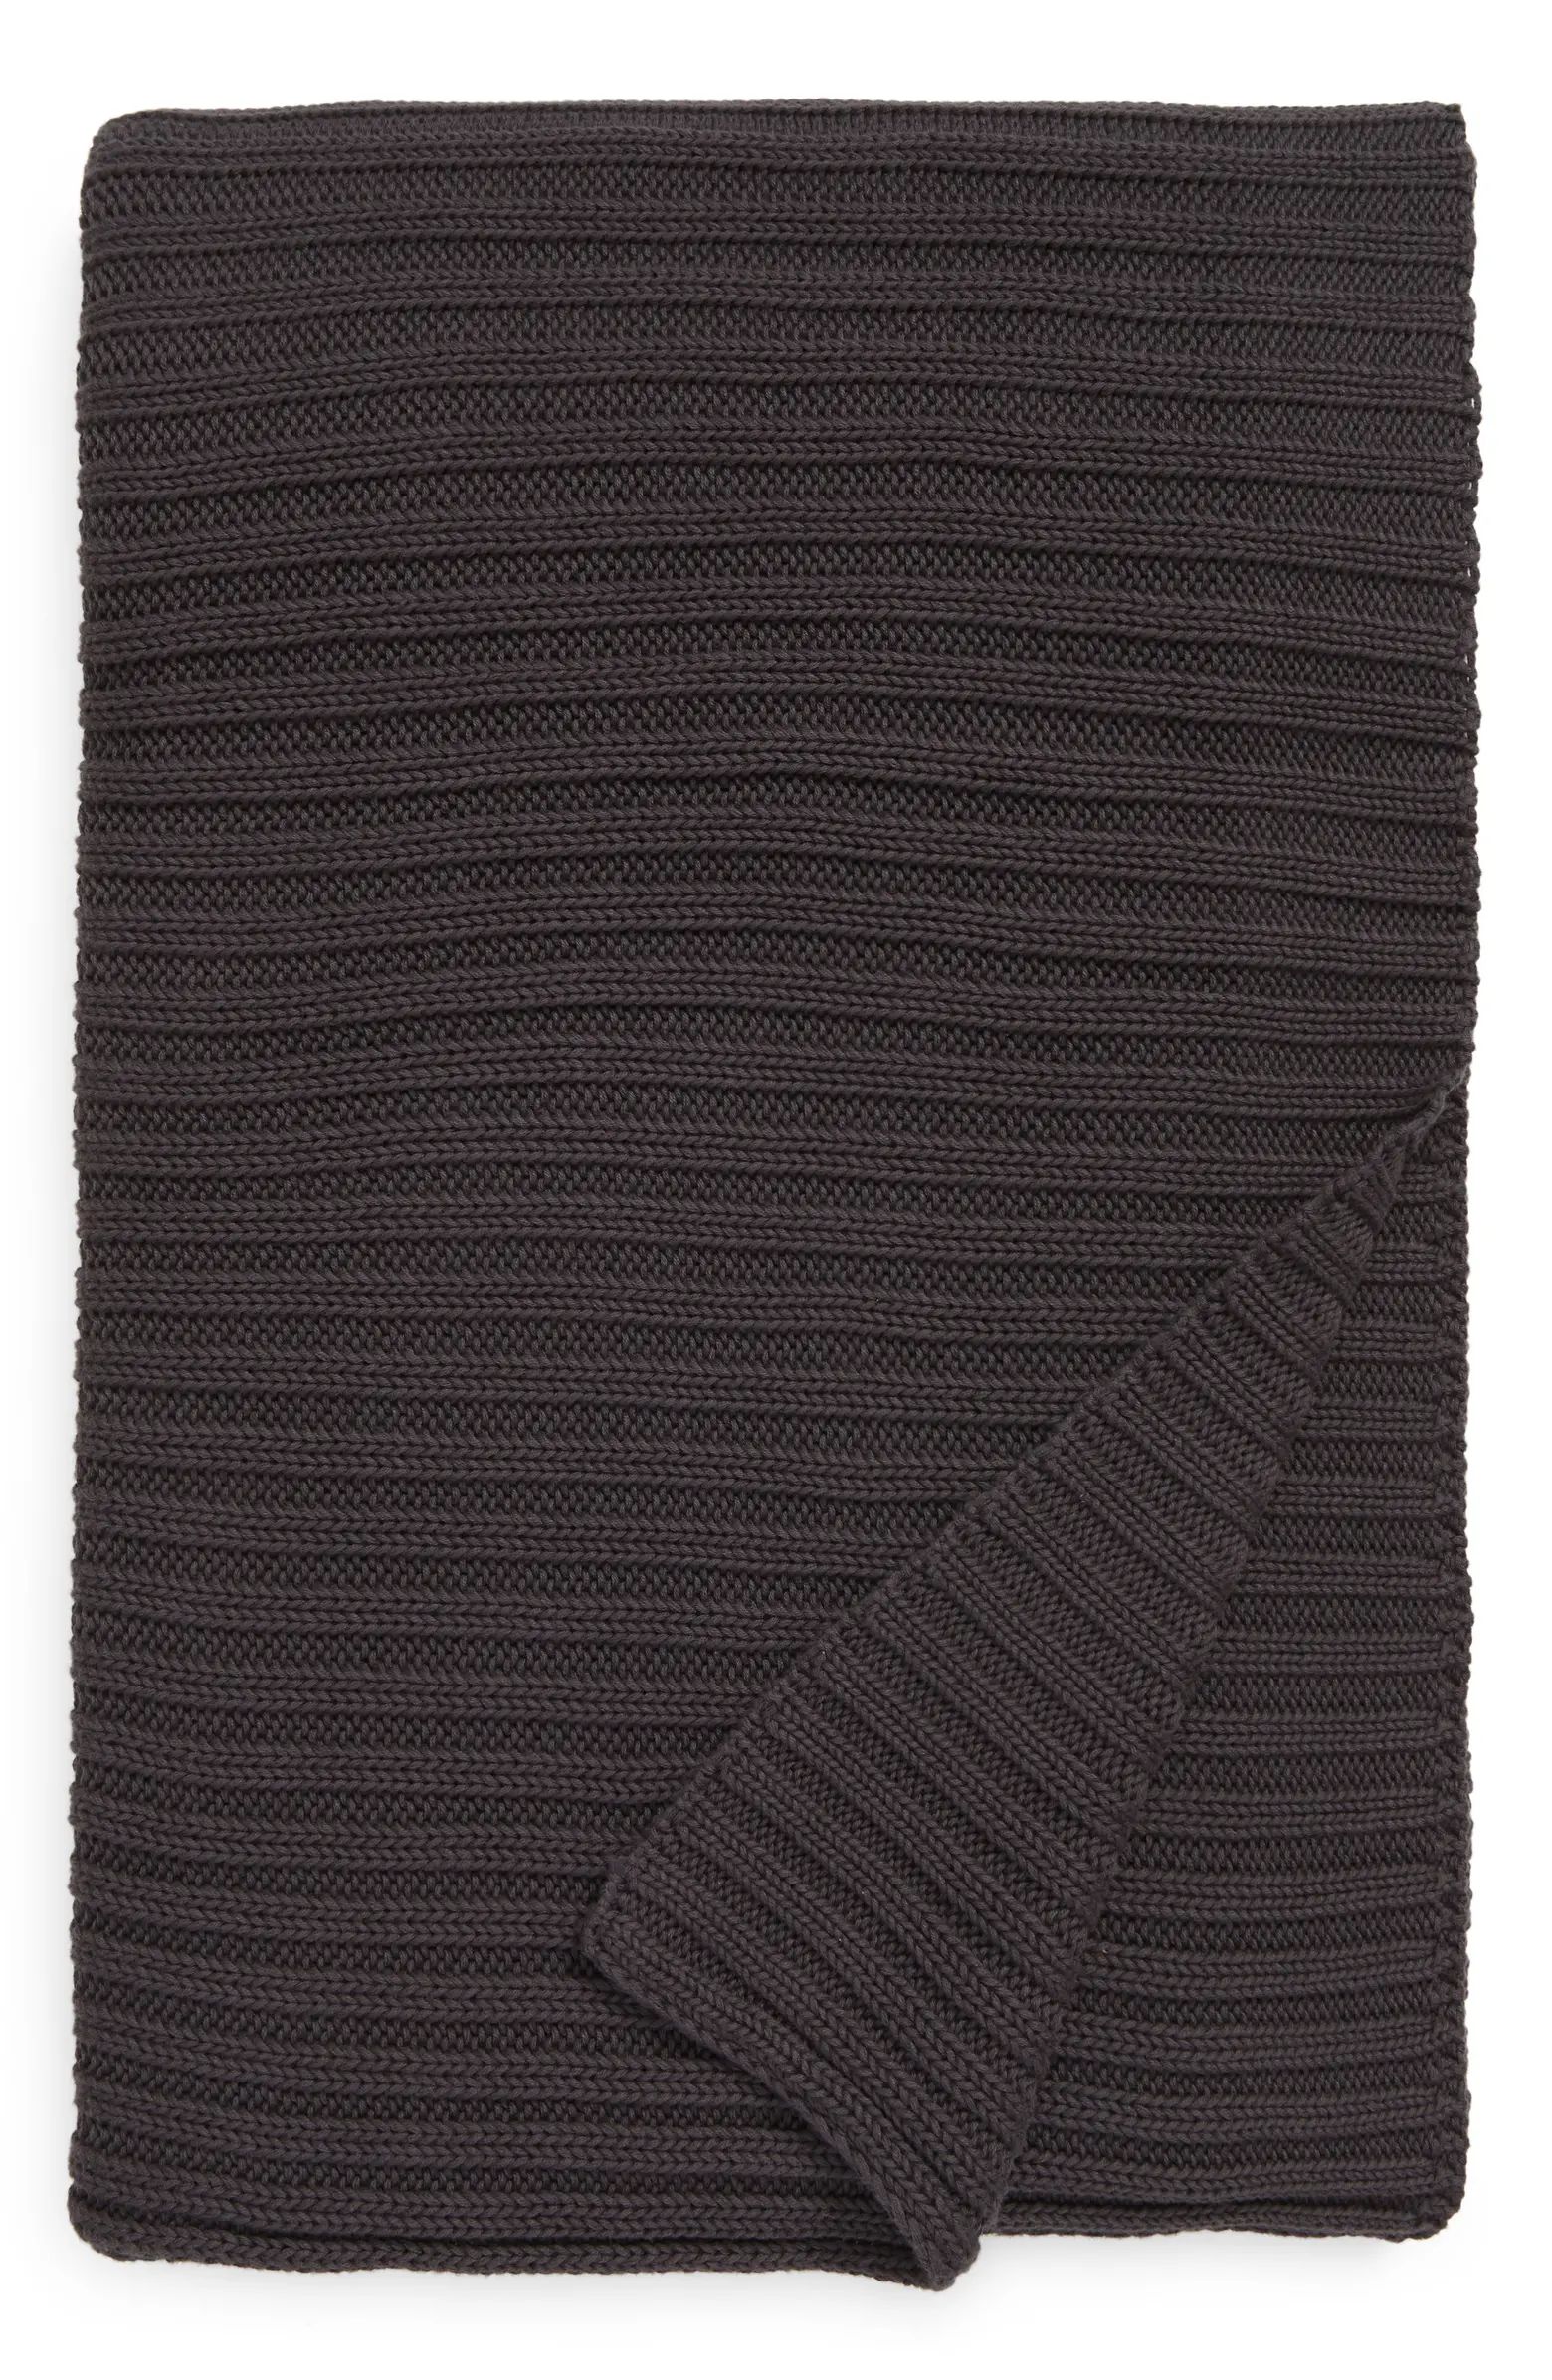 Oversize Knit Throw Blanket | Nordstrom